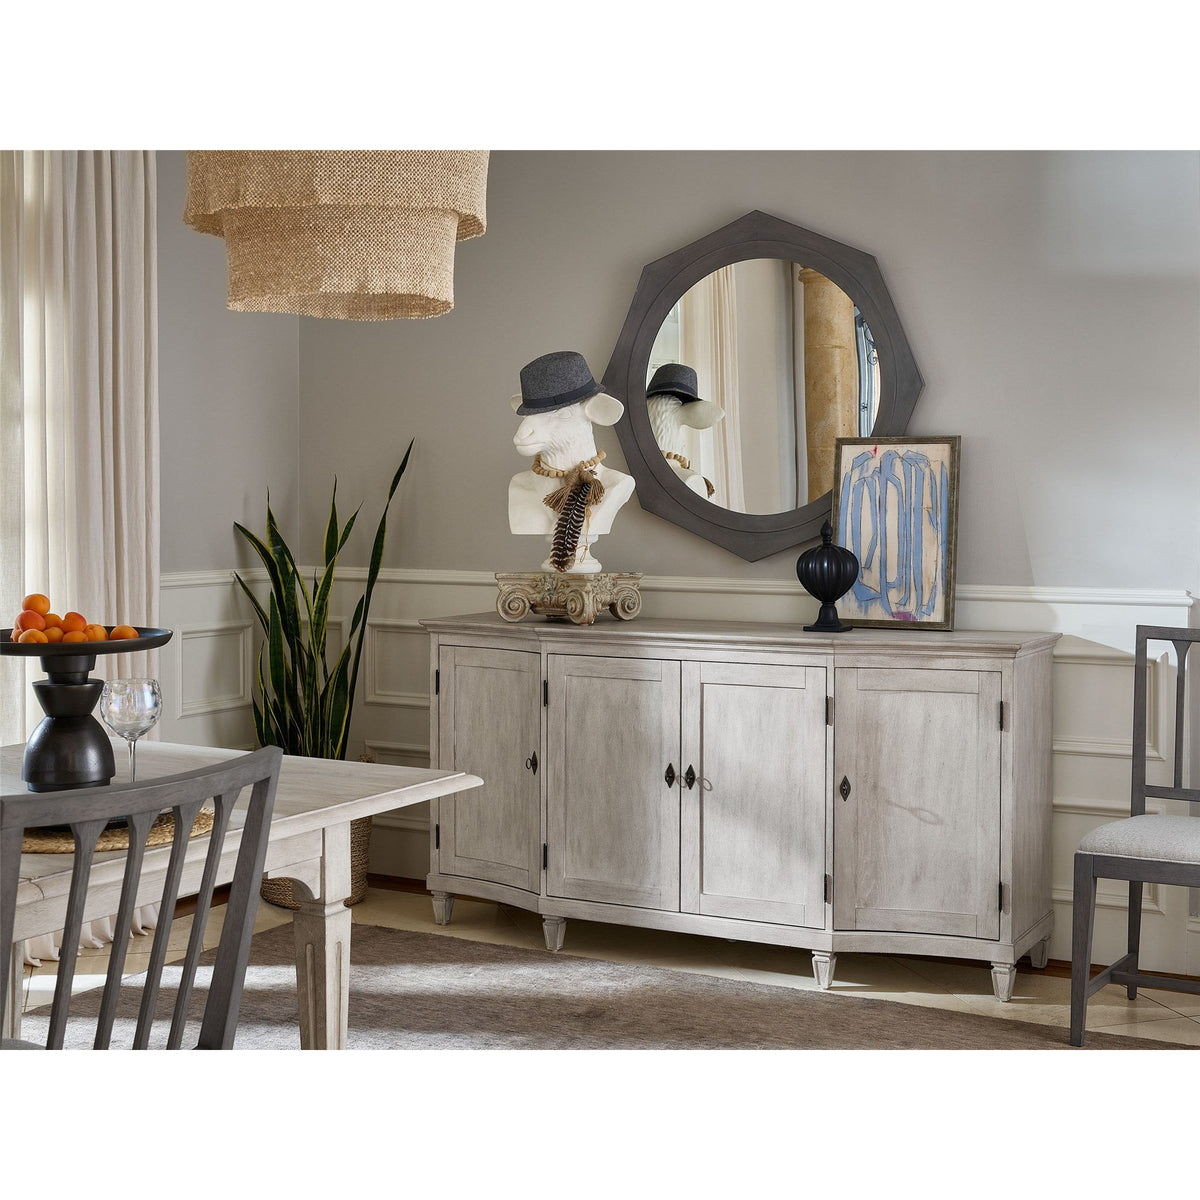 Brooklyn Mirror - Be Bold Furniture